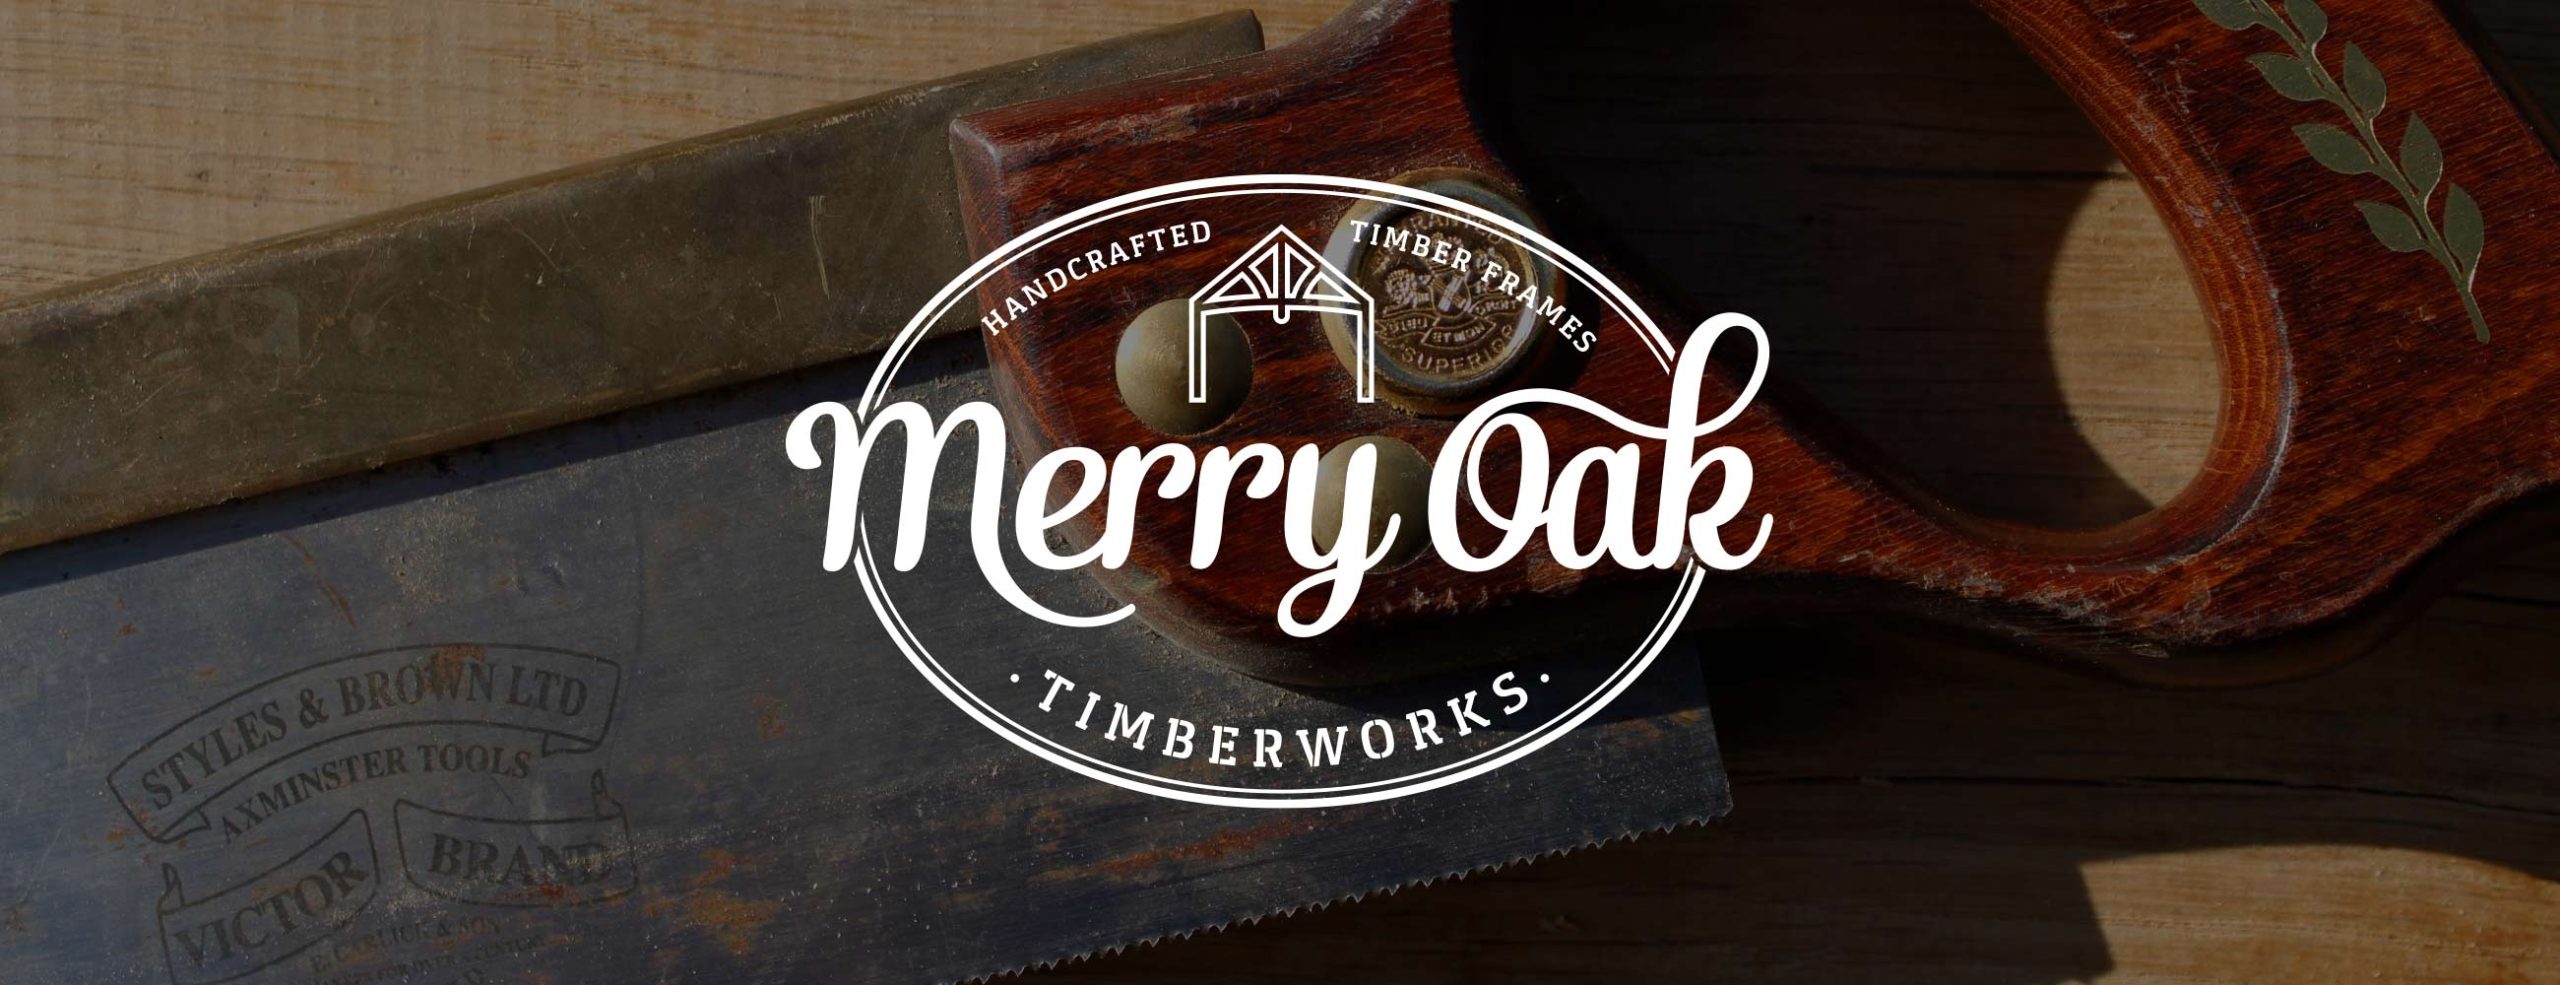 Merry Oak Timberworks Logo